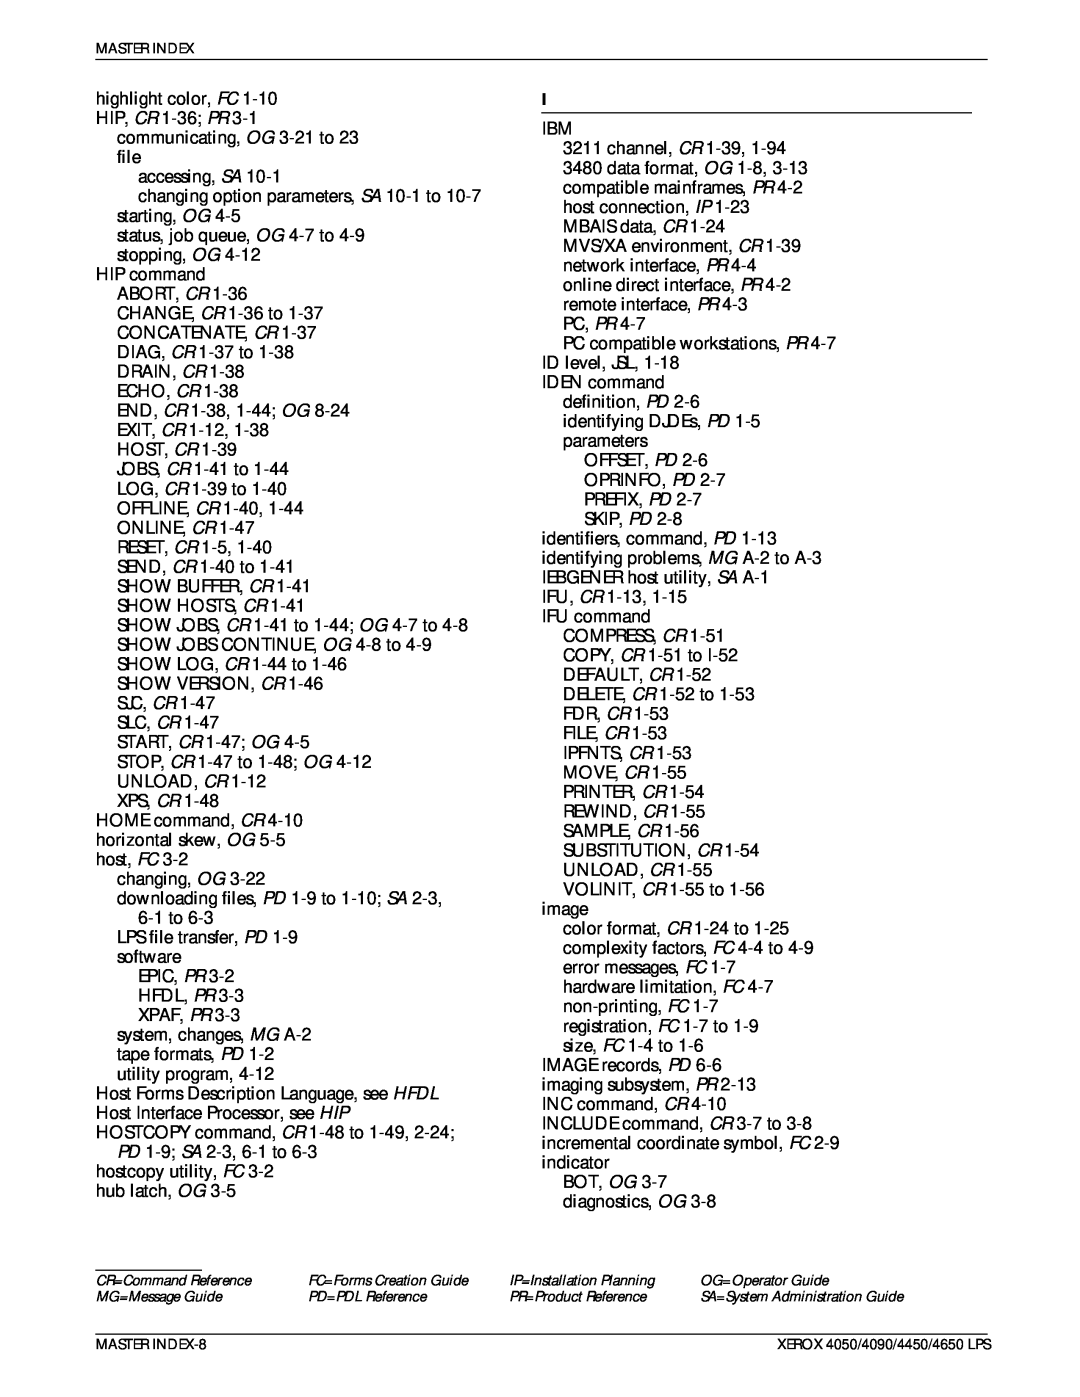 Xerox 4650 LPS manual highlight color, FC 1-10HIP, CR 1-36 PR 